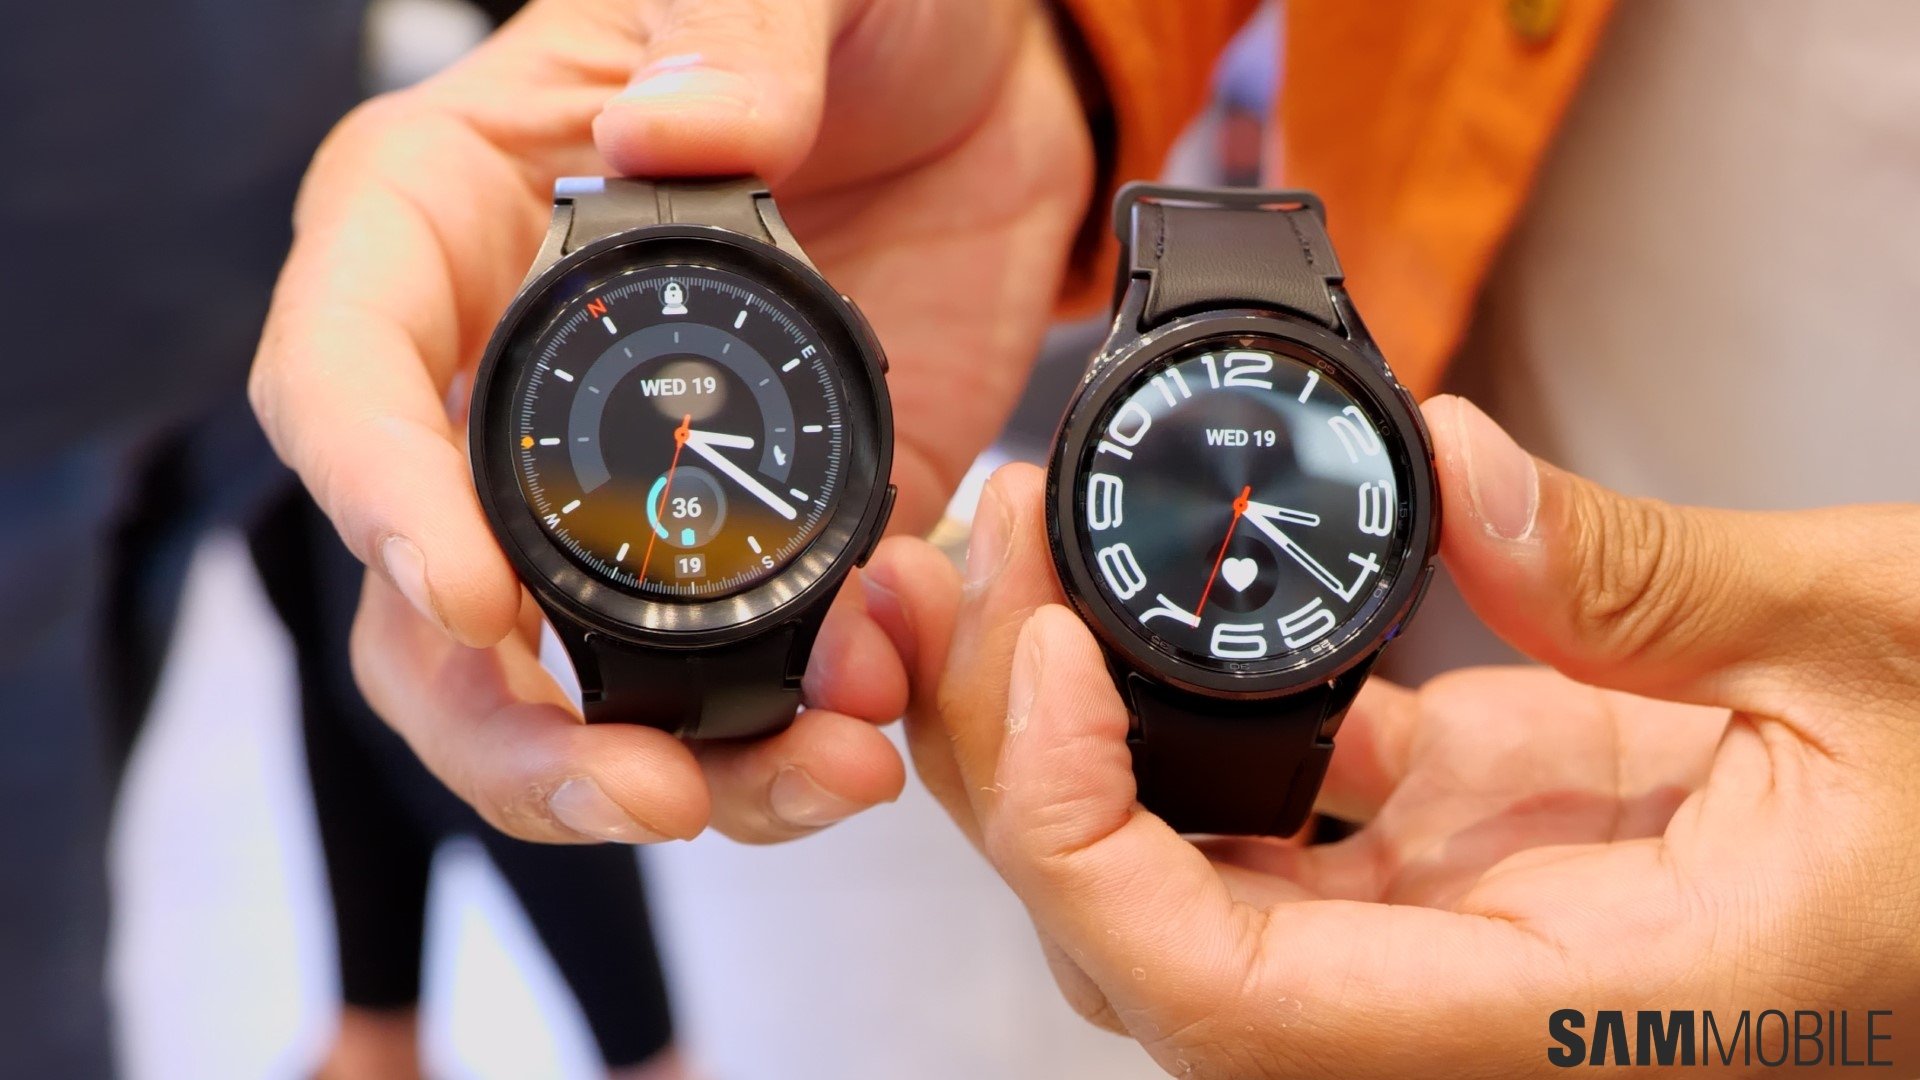 Is Samsung Galaxy Watch 5 Pro worth buying in 2023?